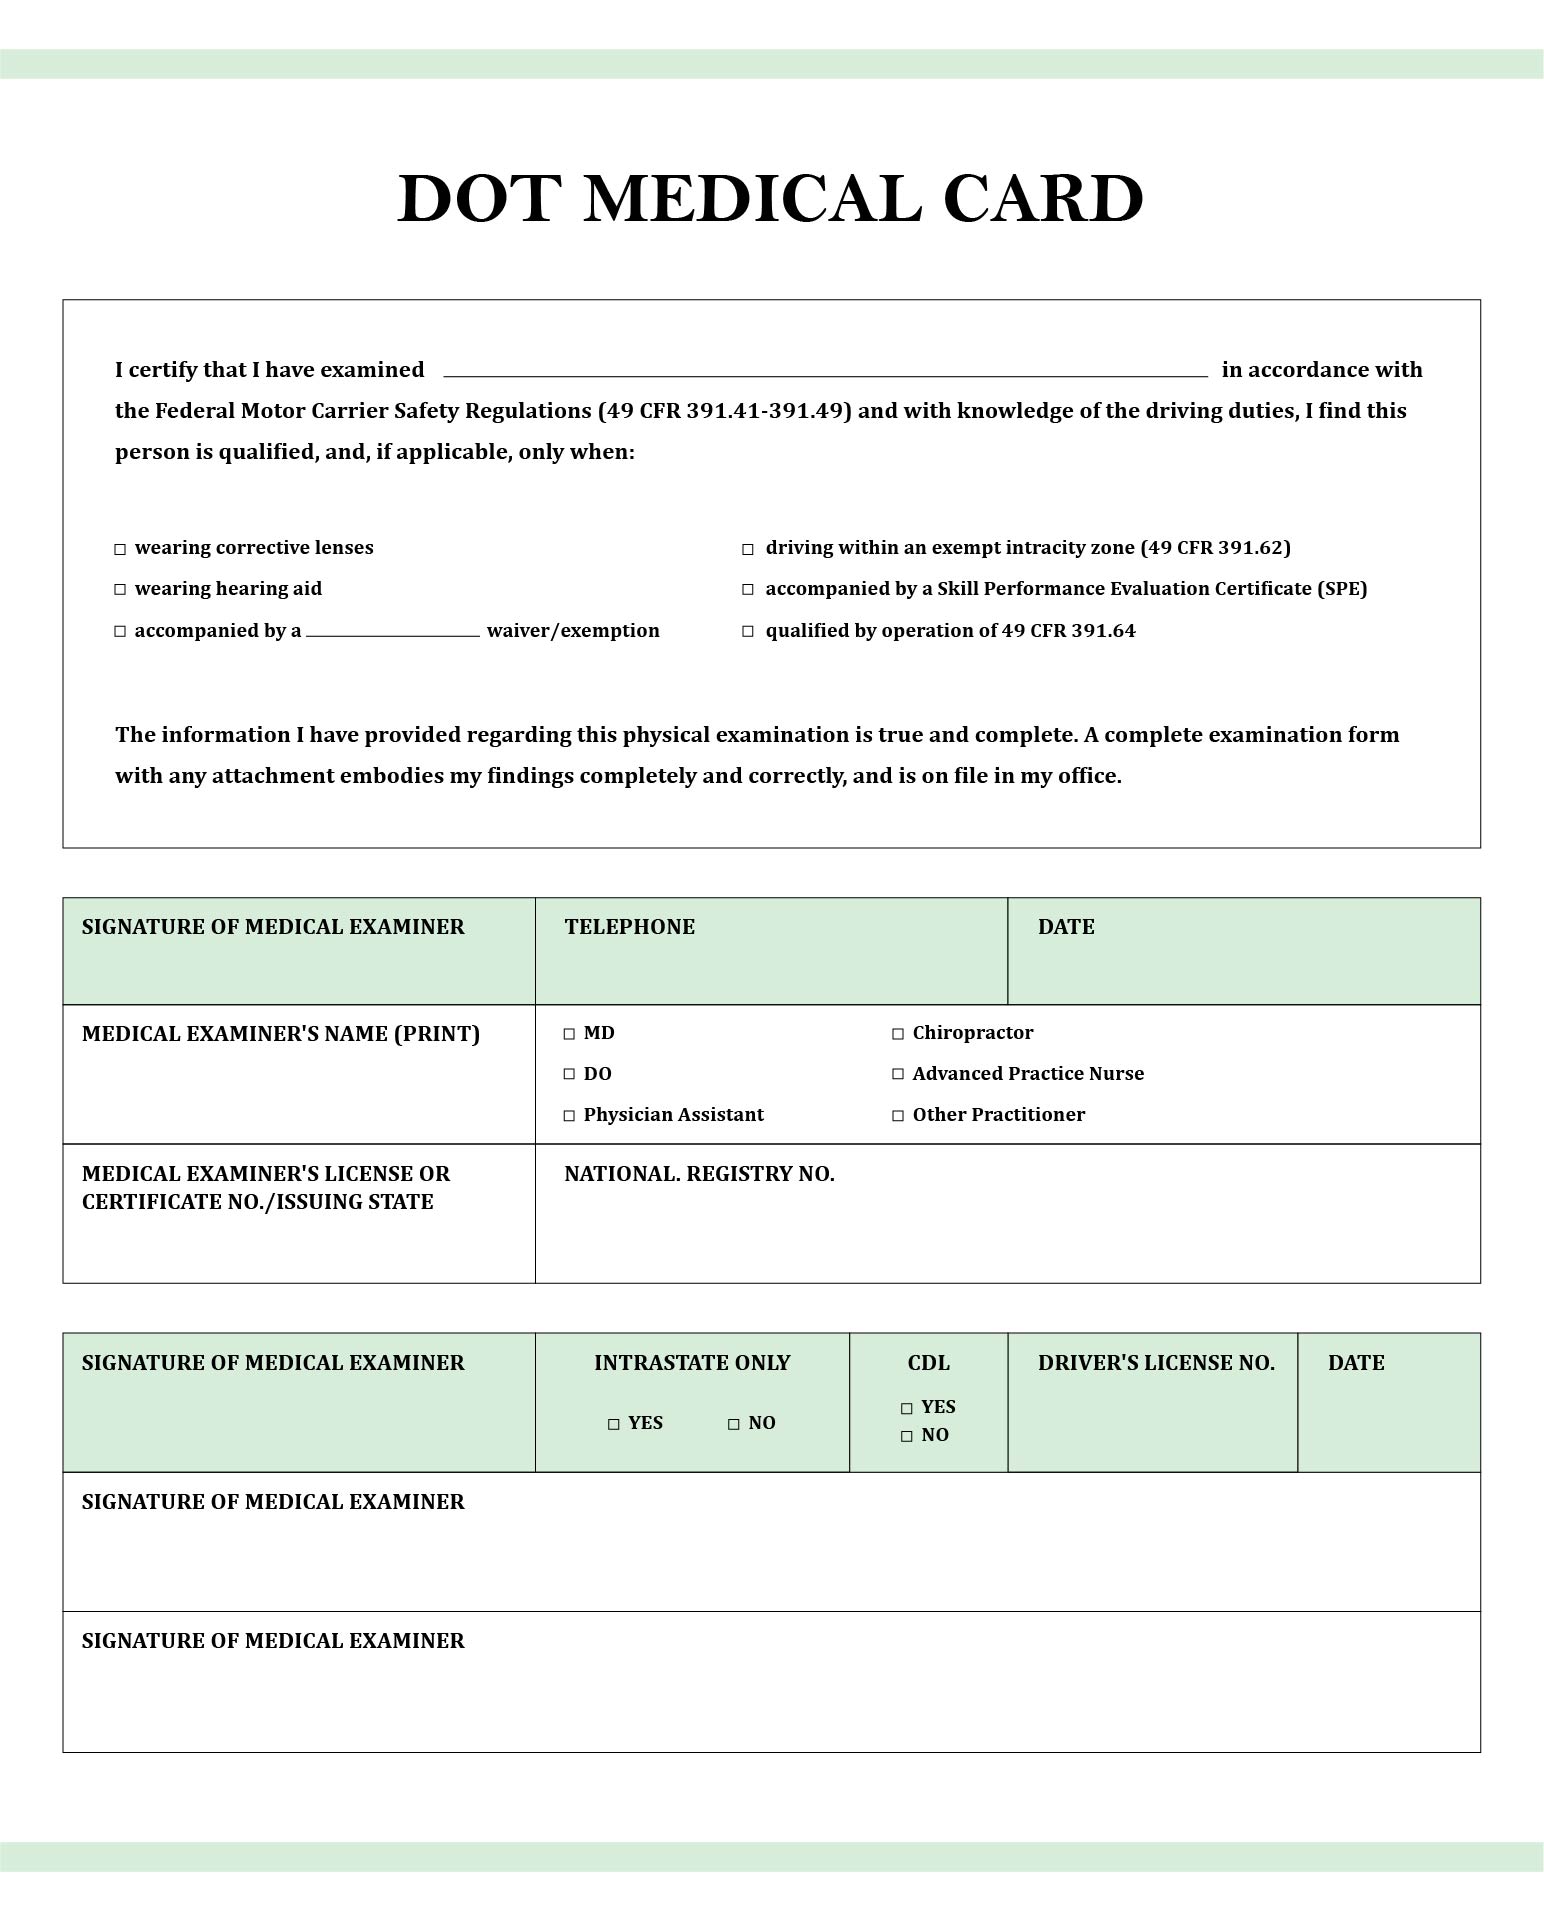 Dot Medical Card Sample